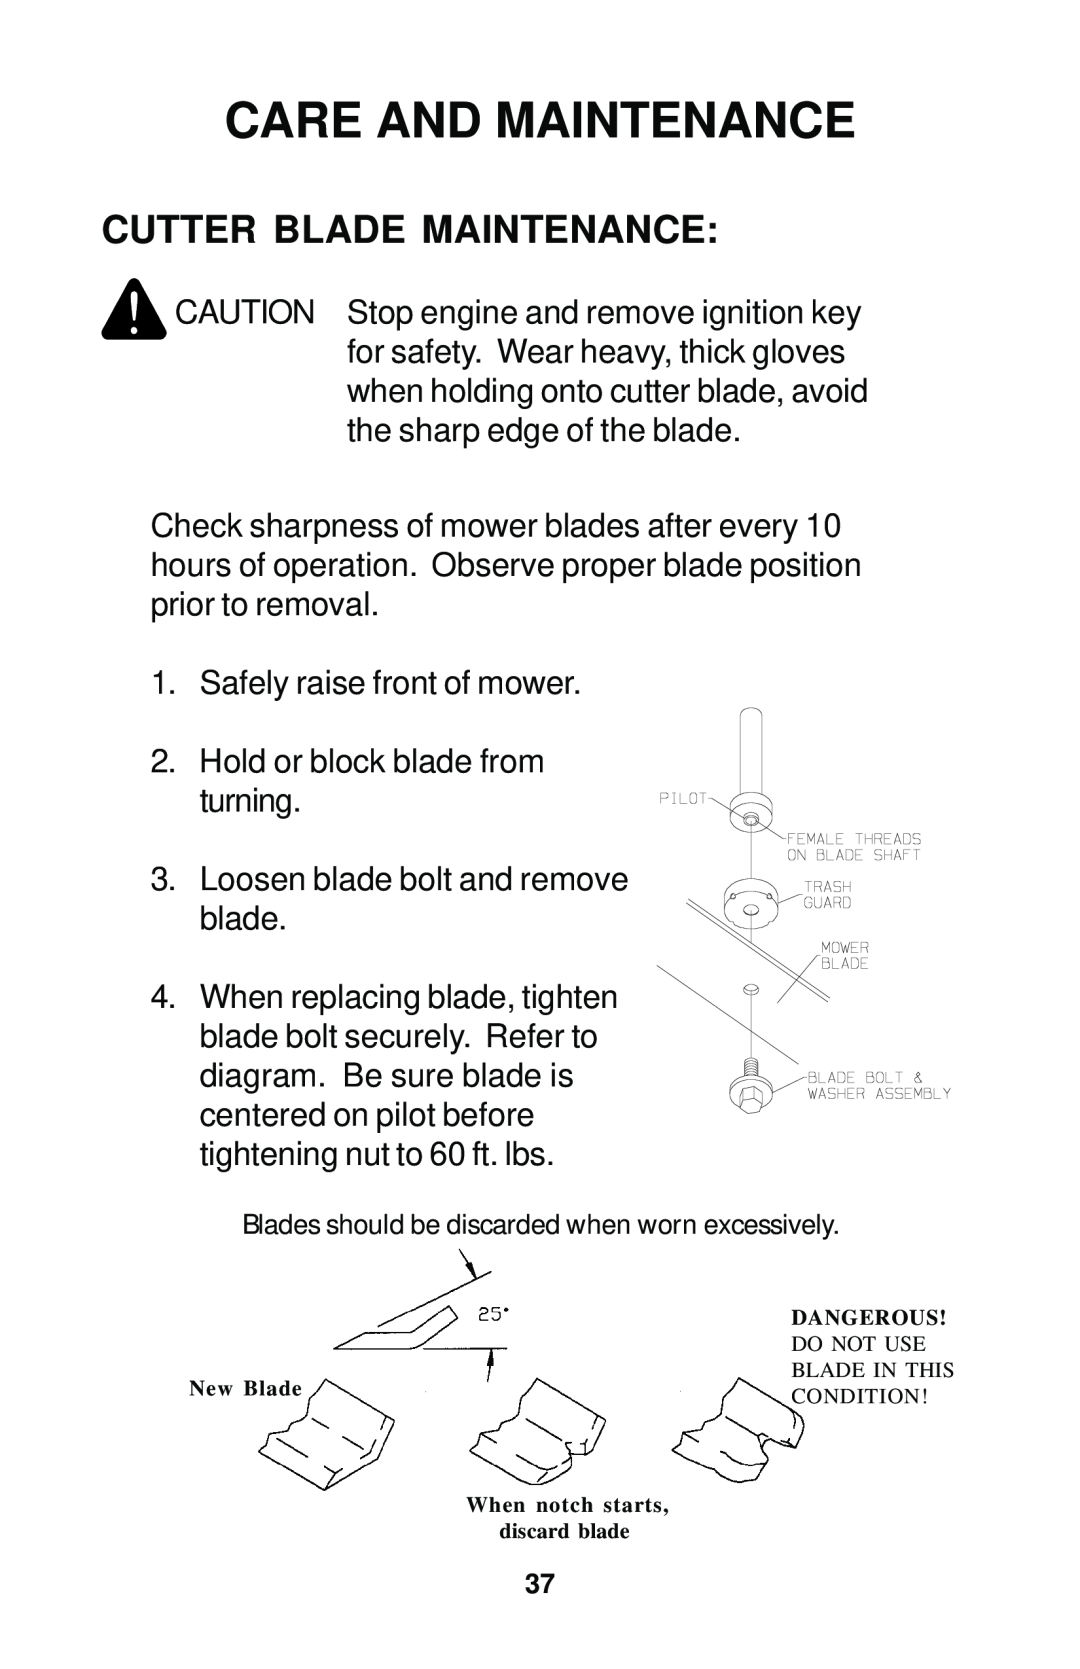 Dixon 17823-0704 manual Cutter Blade Maintenance, Care And Maintenance 